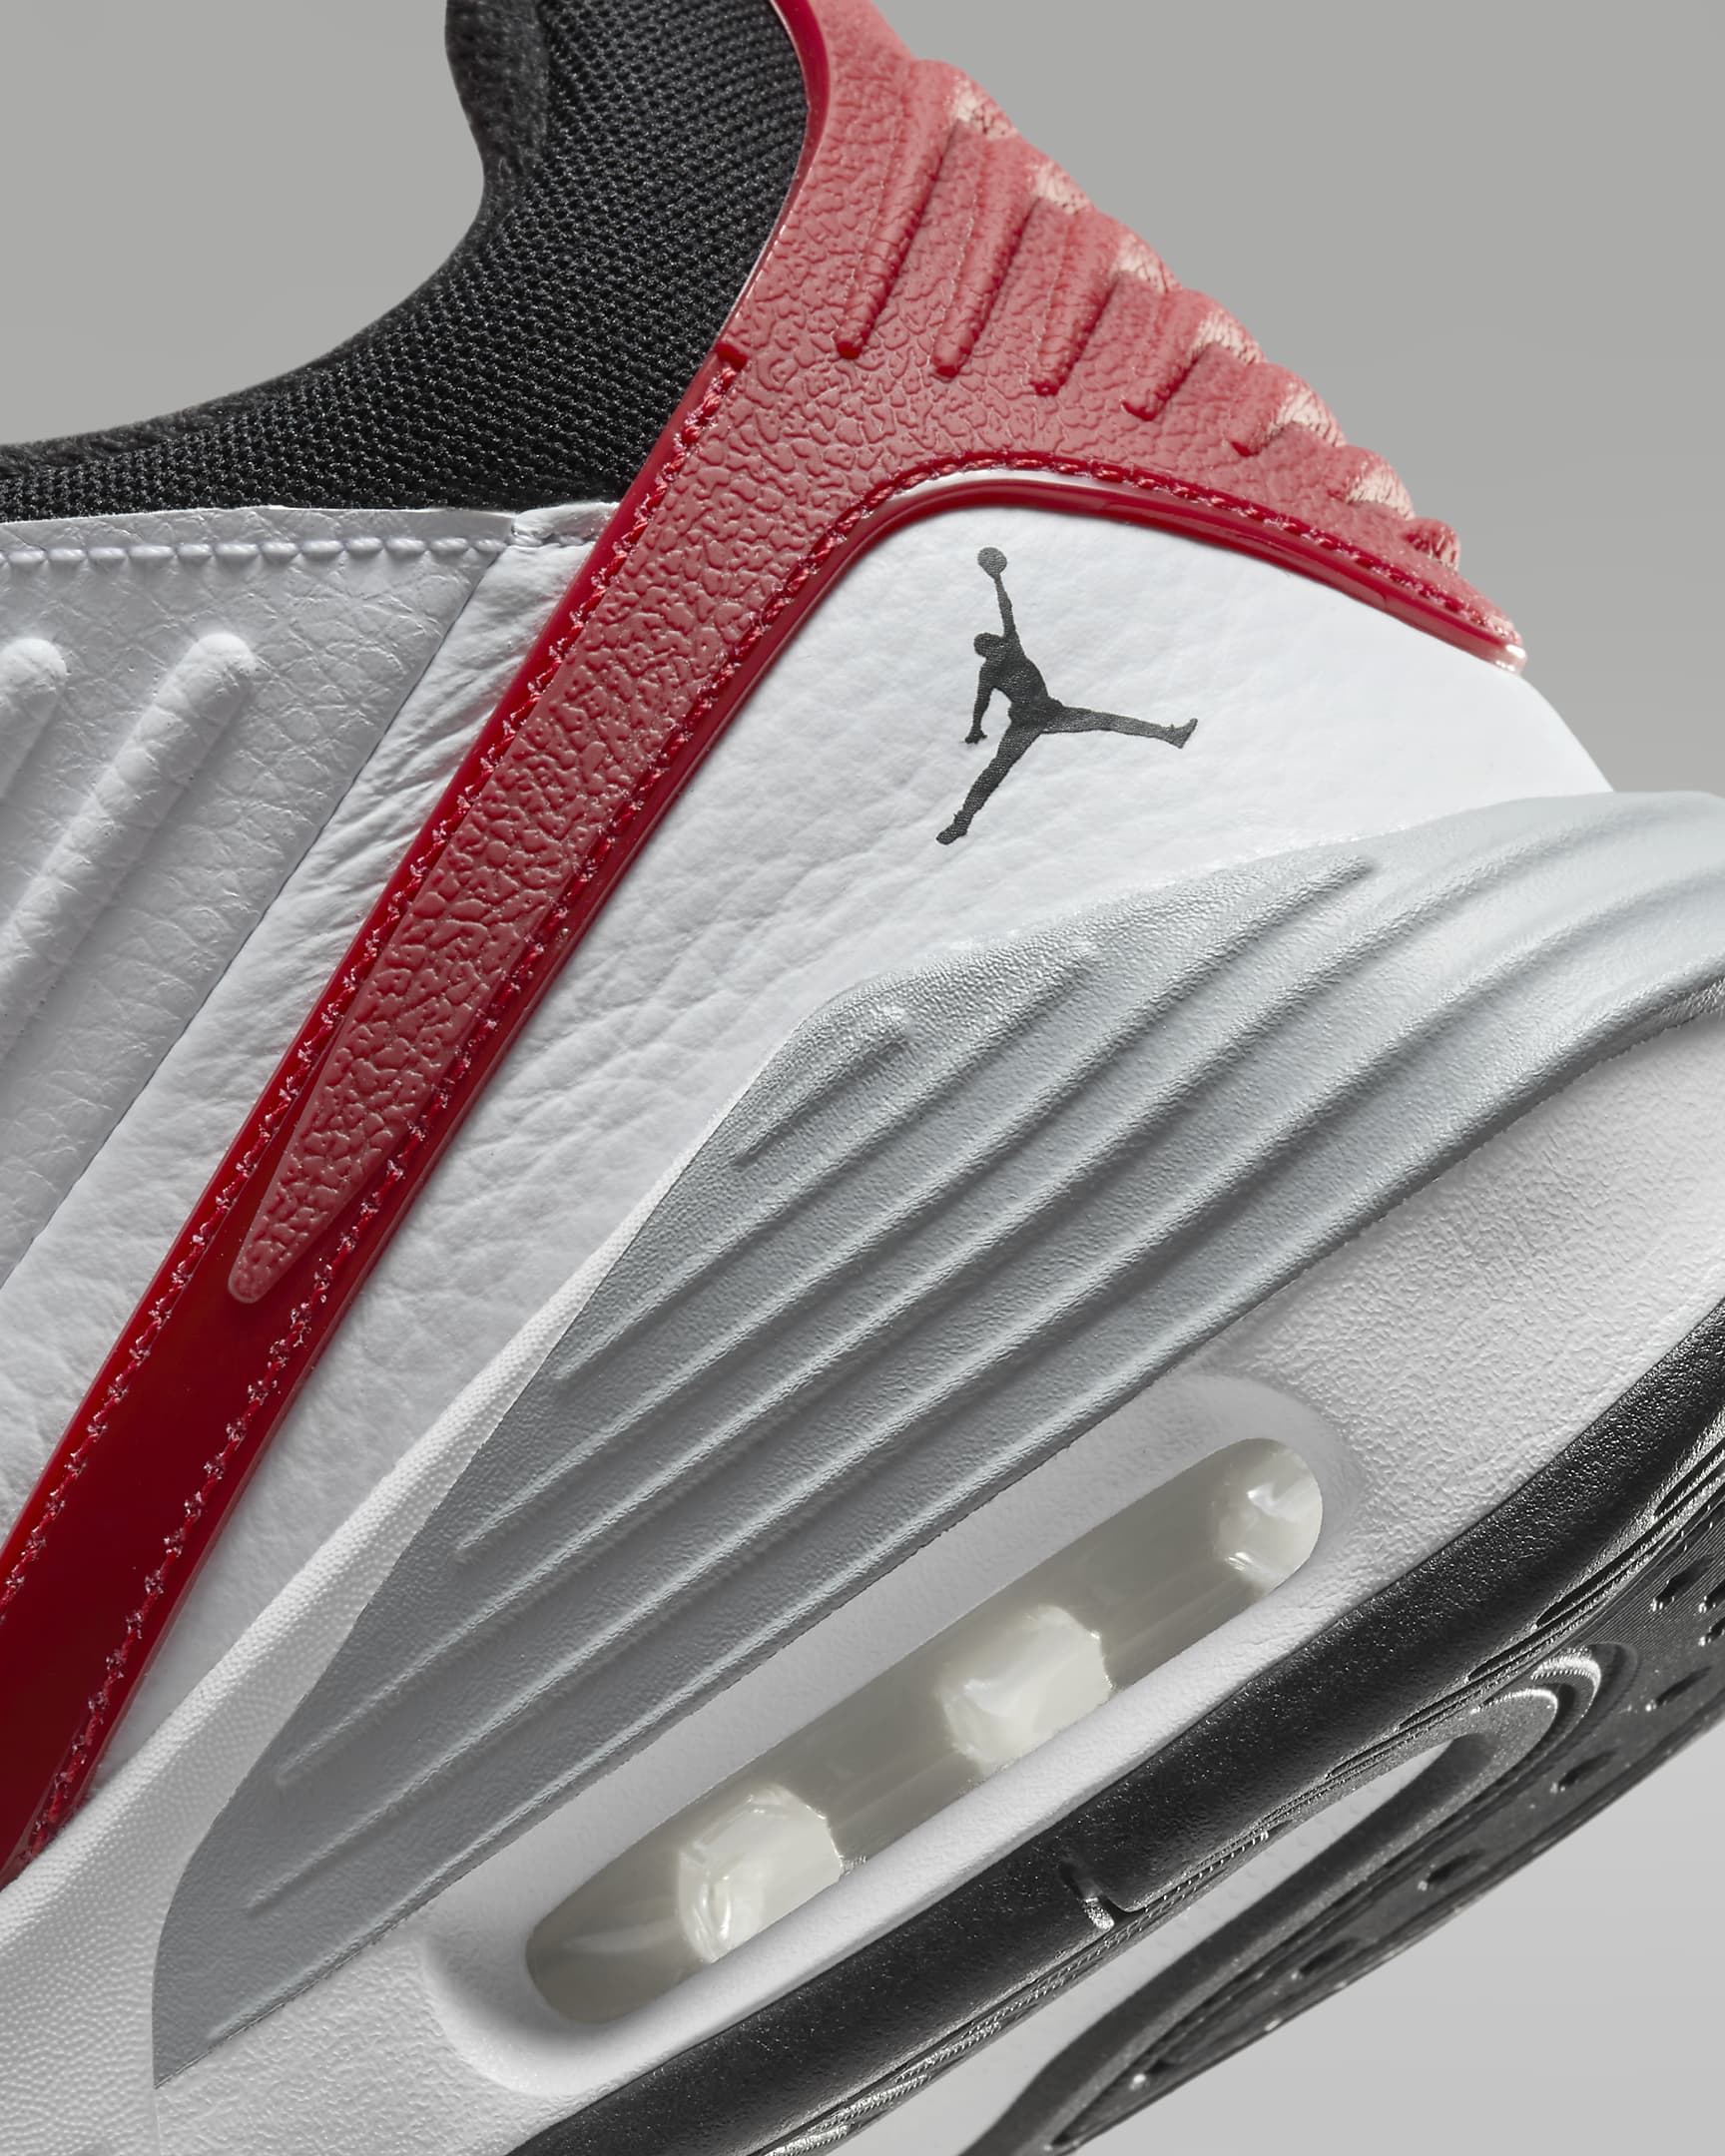 Jordan Max Aura 5 Men's Shoes - White/Varsity Red/Wolf Grey/Black